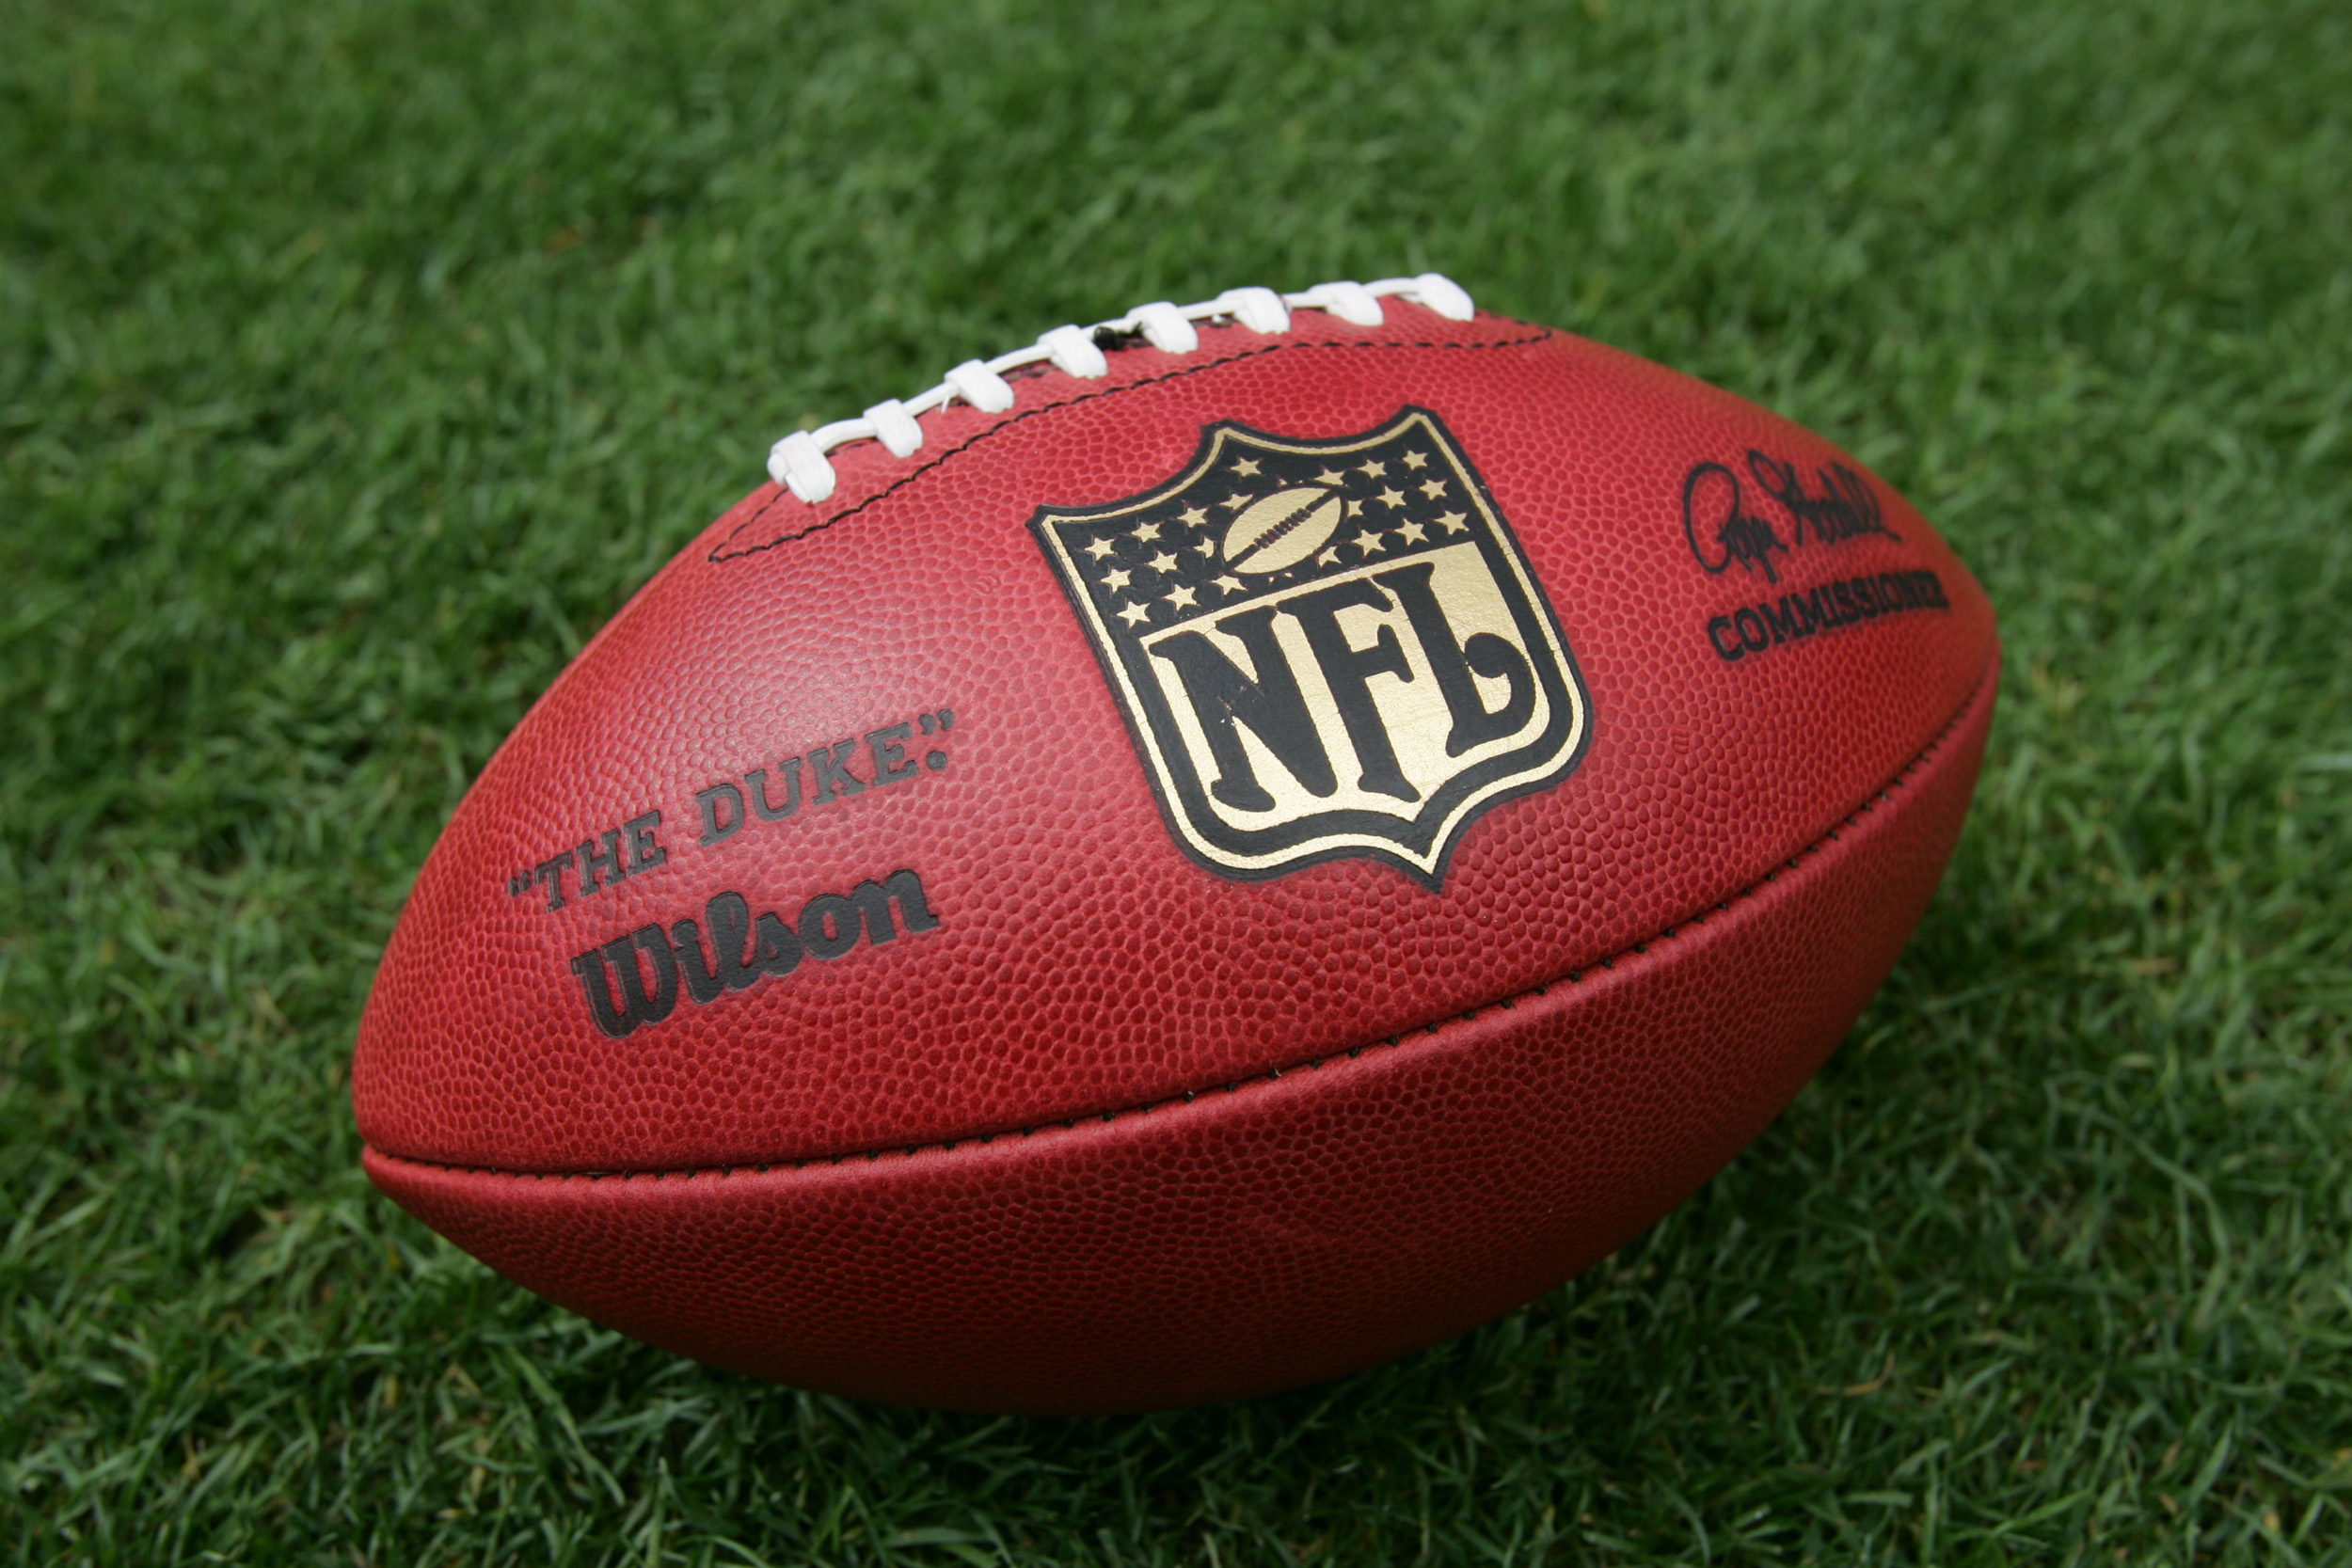 NFL Eyes $25 Billion Goal Ahead of Rams-Patriots Super Bowl LIII